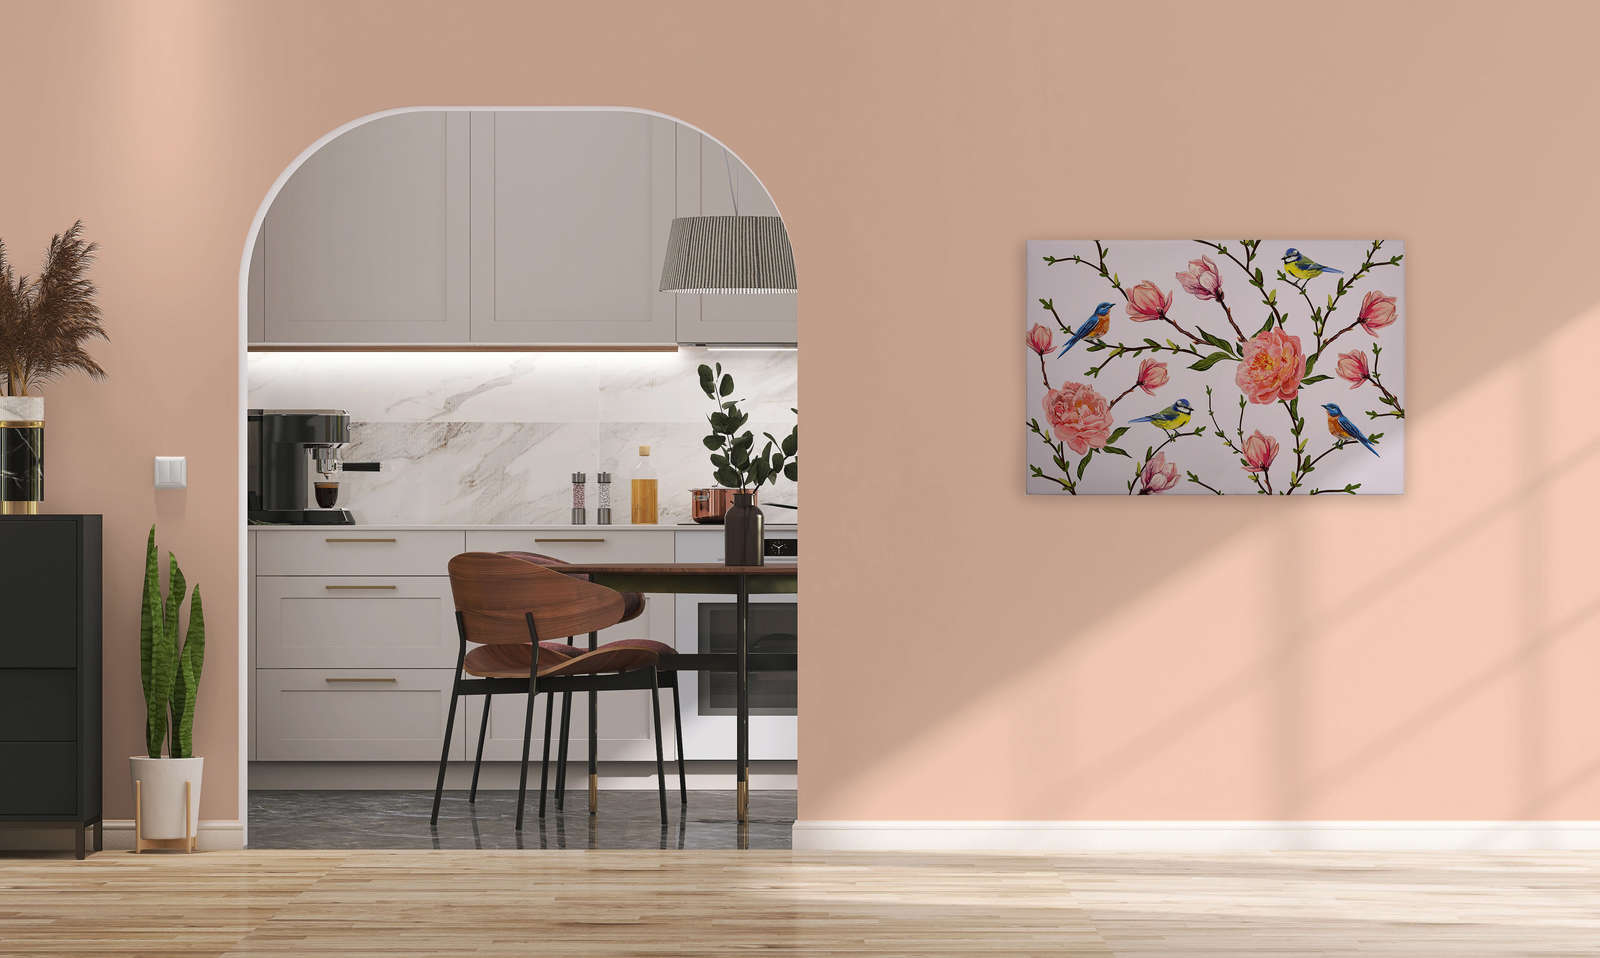             Canvas Vogels & Bloemrijk minimalistisch - 0,90 m x 0,60 m
        